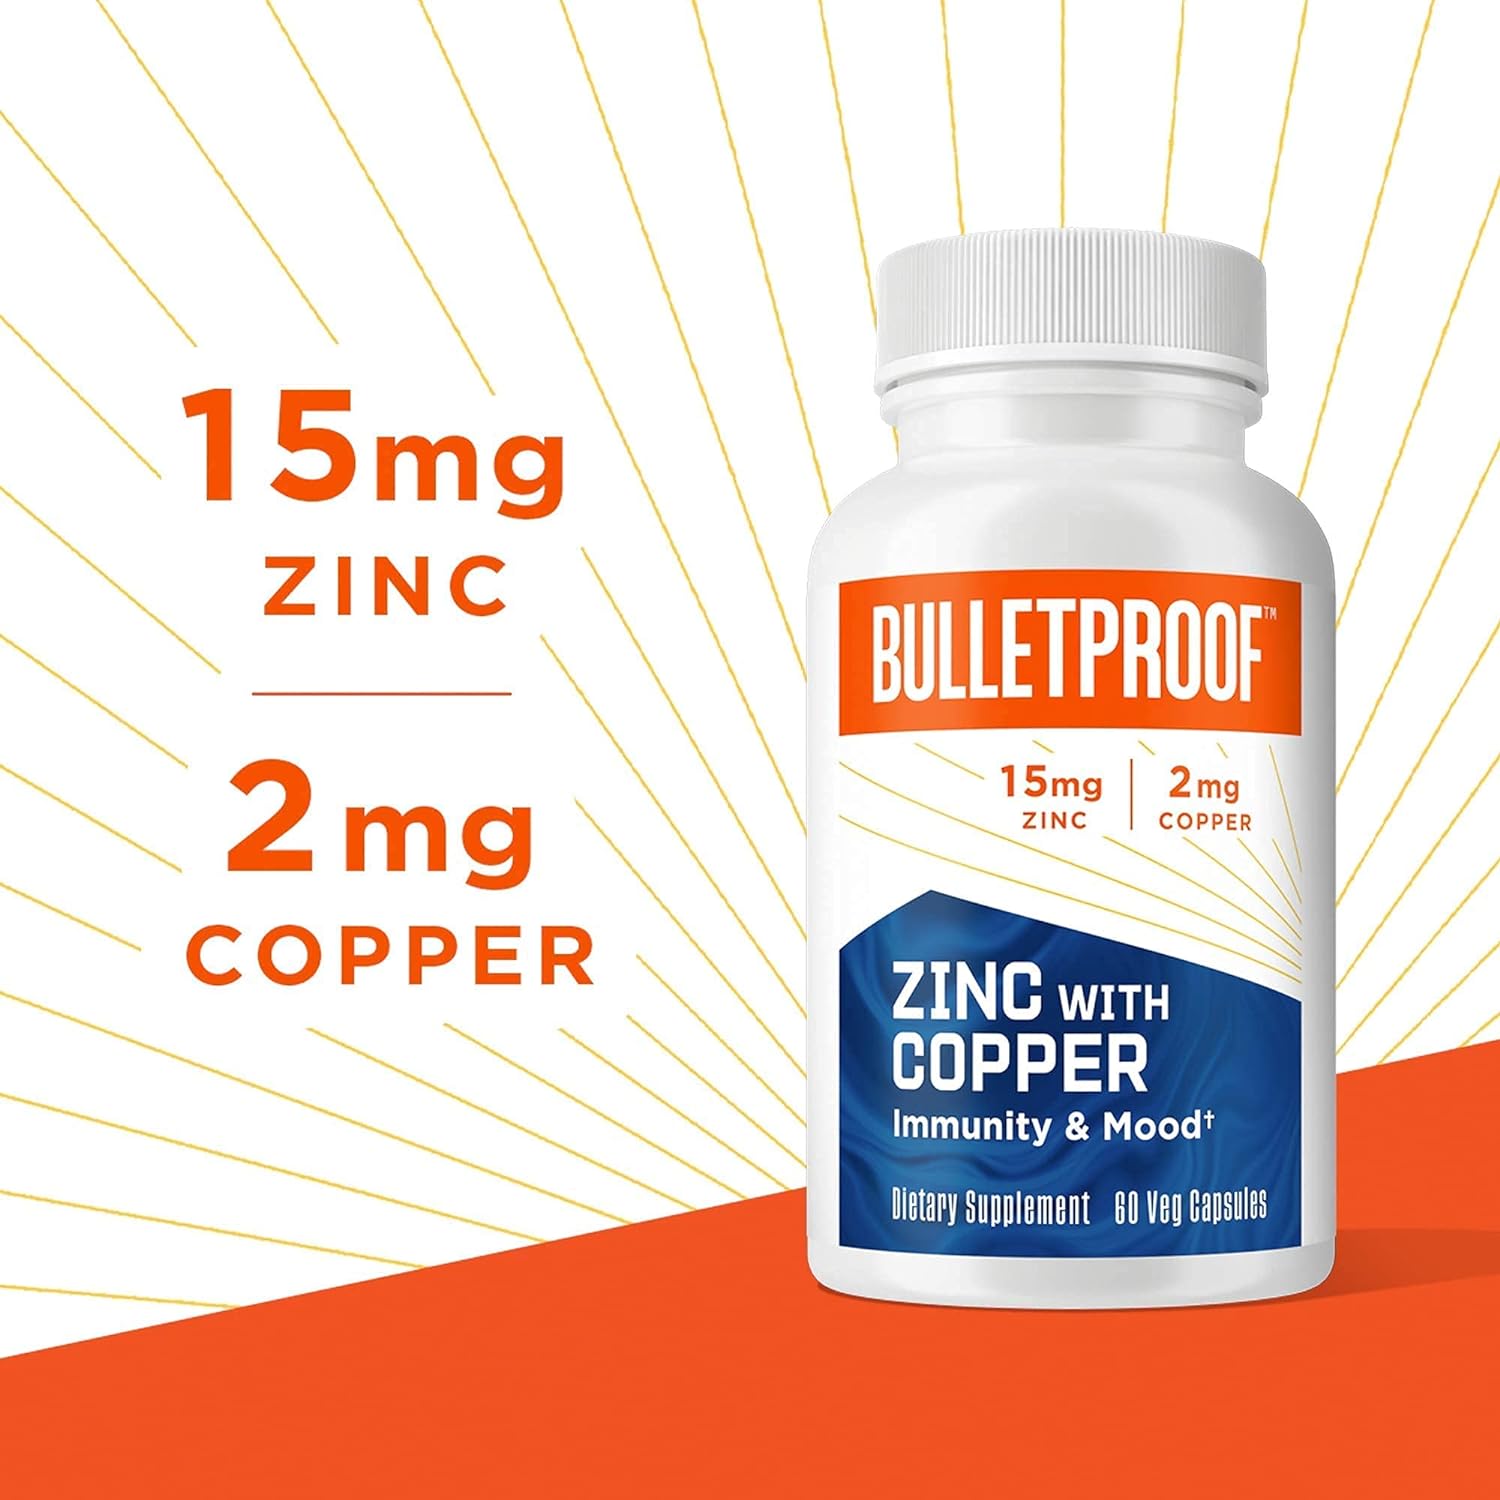 Bulletproof Triple Threat Strength Bundle, Vitamins A-D-K, 30 Softgels, Zinc with Copper, 60 Capsules, Methyl B-12, Spearmint Flavor, 60 Lozenges